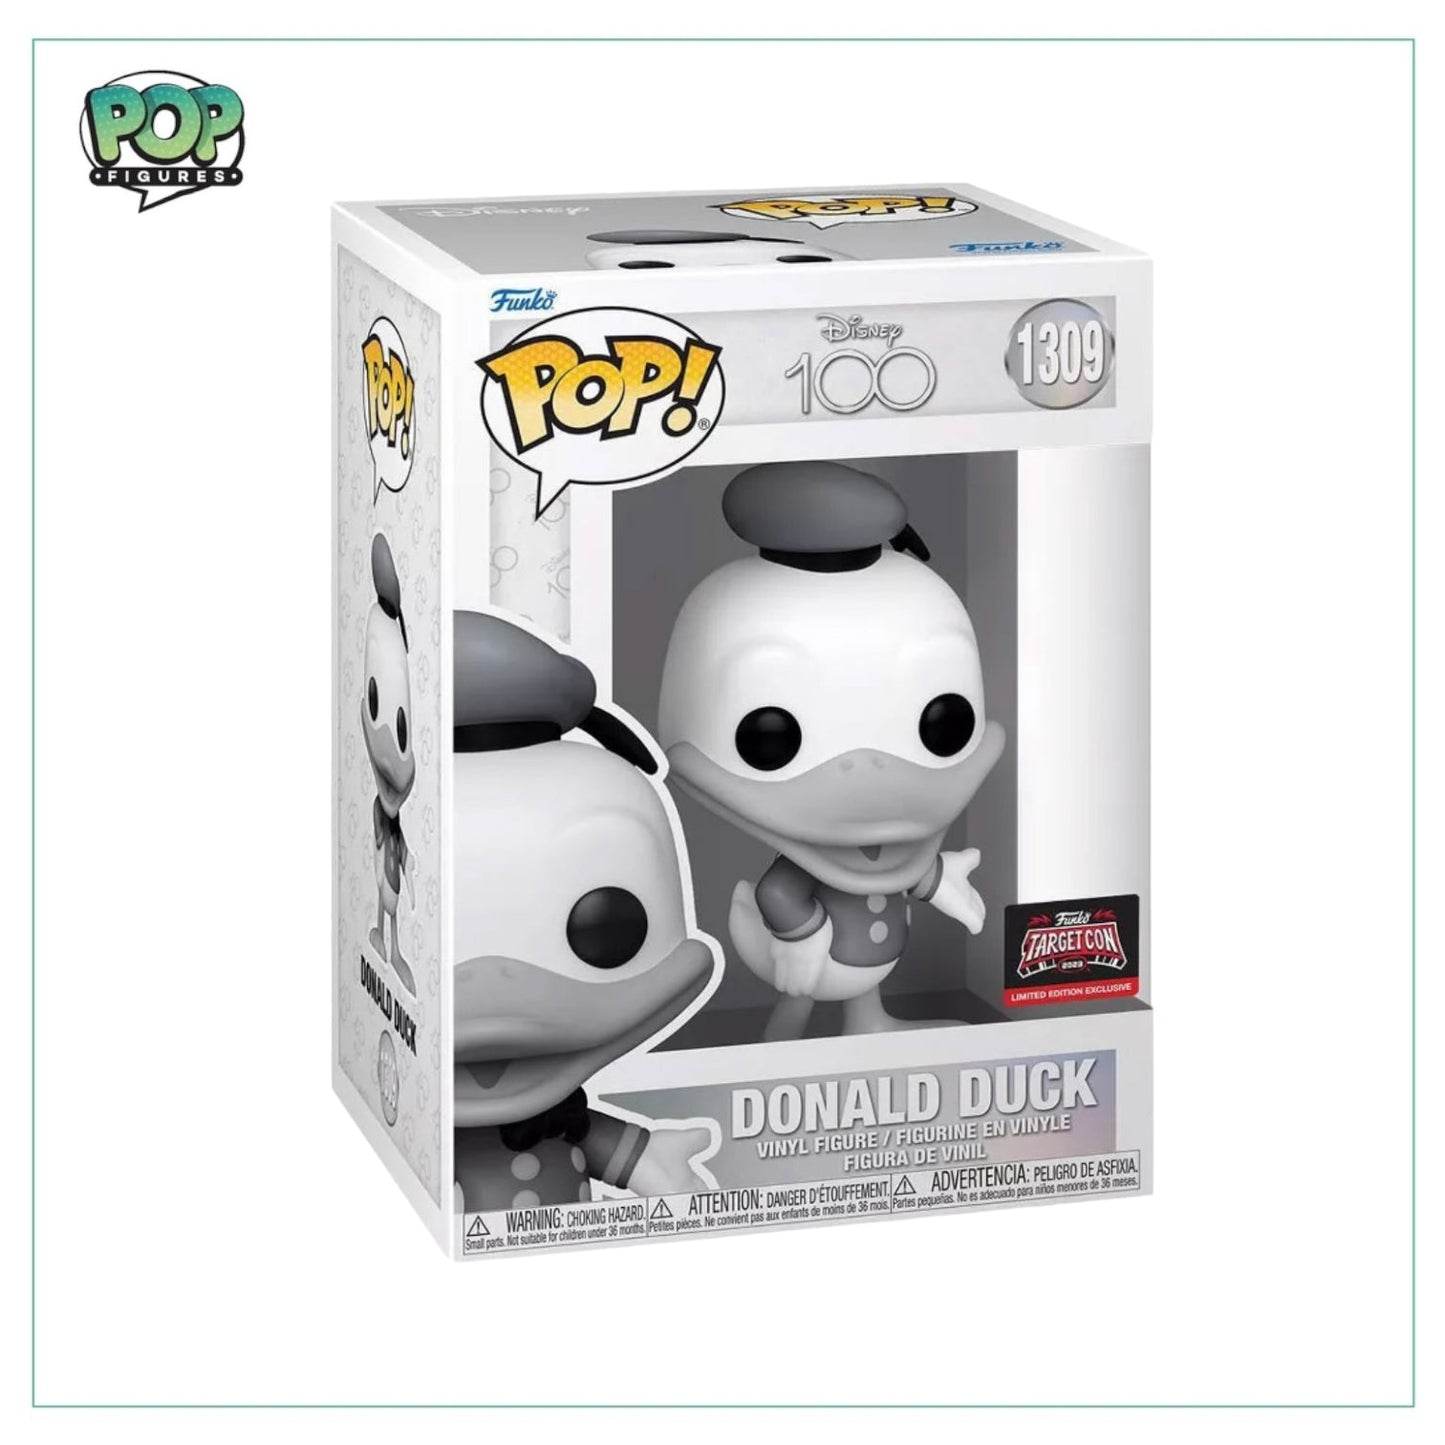 Donald Duck #1309 Funko Pop! - Disney 100 - Target Con 2023 Exclusive - Angry Cat